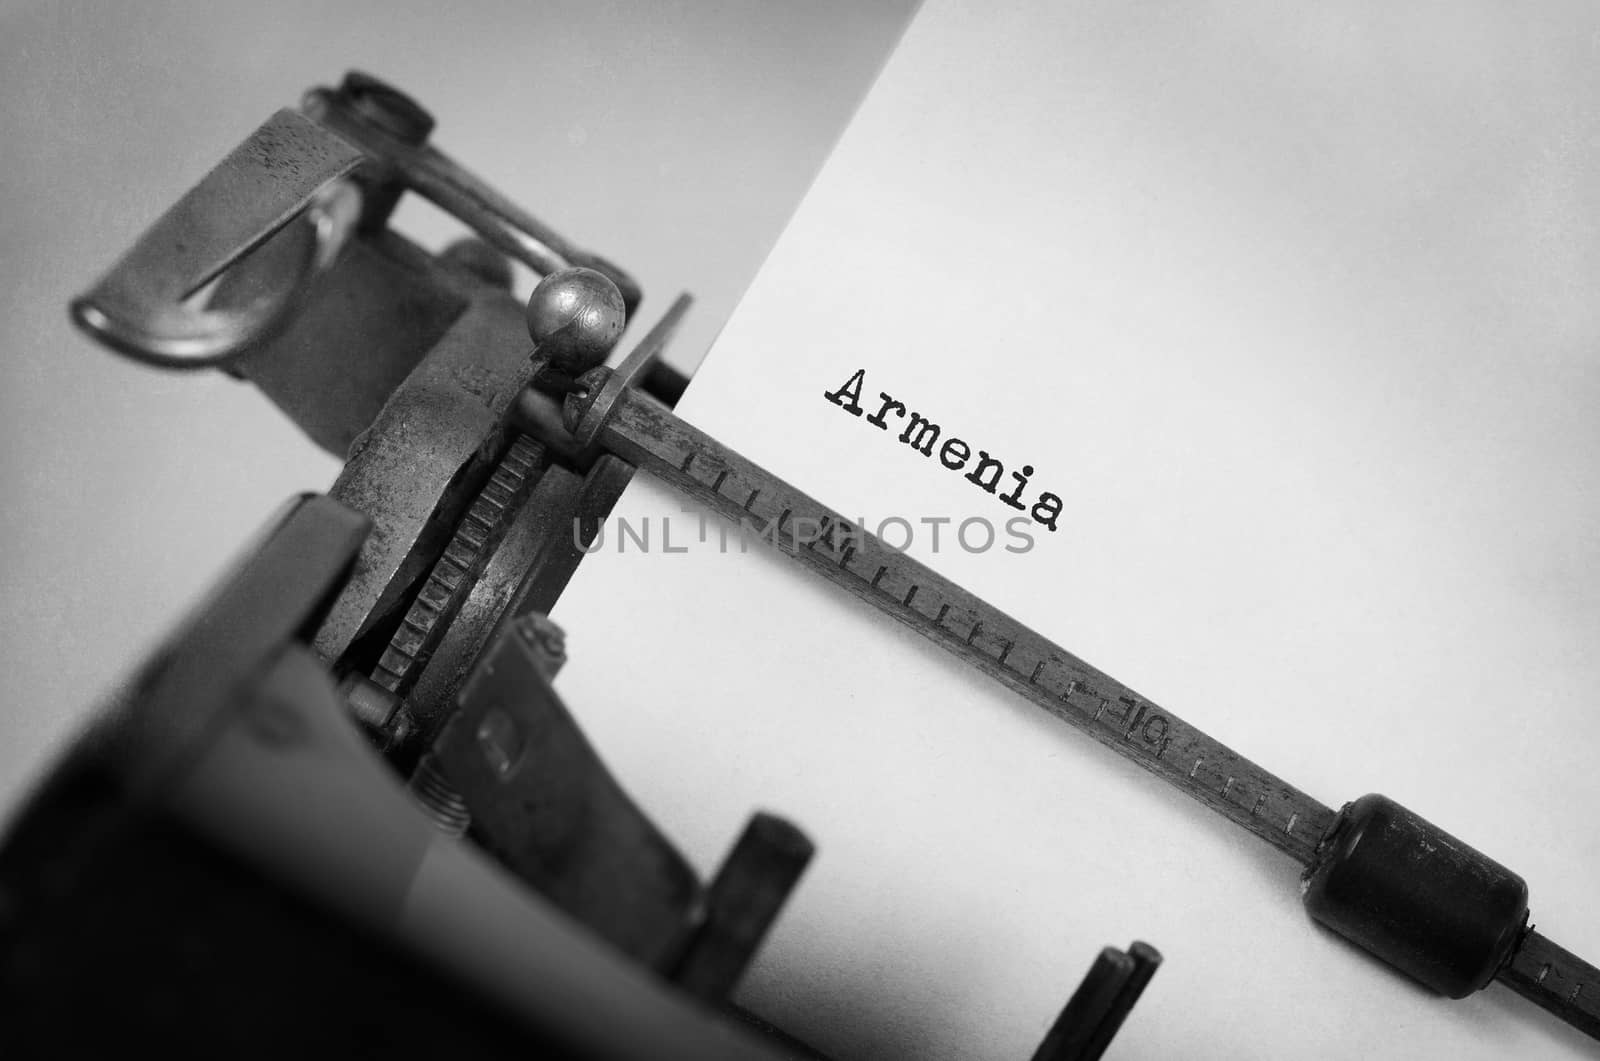 Old typewriter - Armenia by michaklootwijk